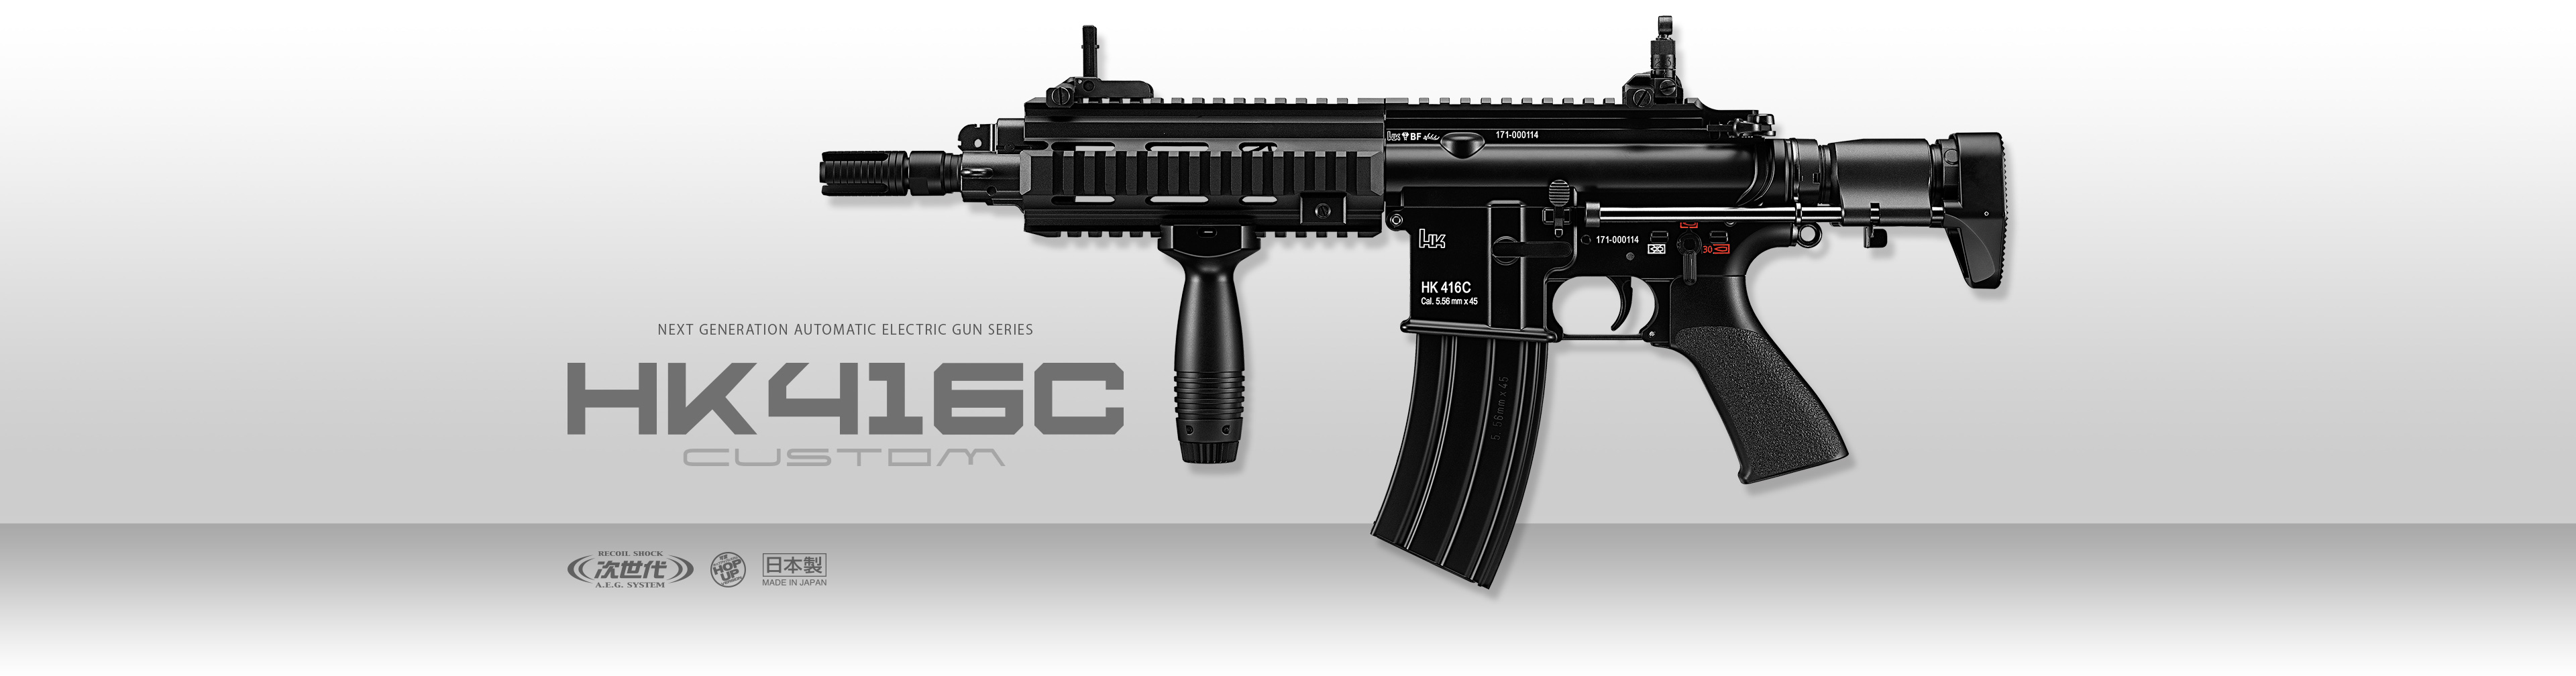 HK416C カスタム